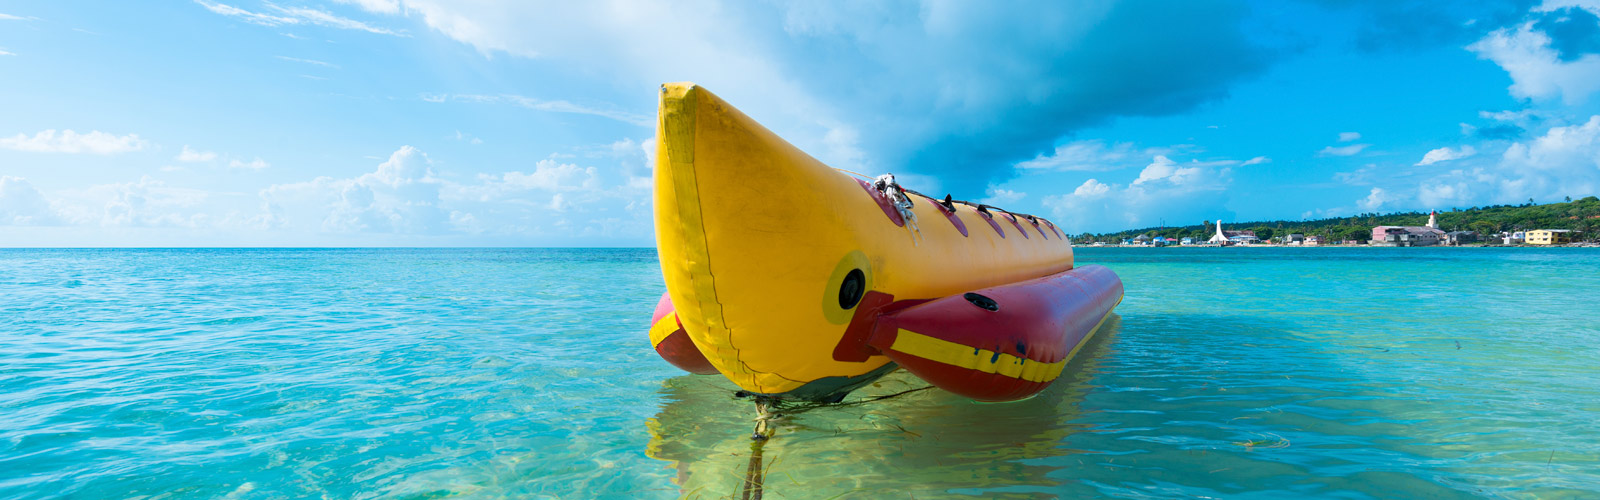 Banana Boat Rides on Moreton Island